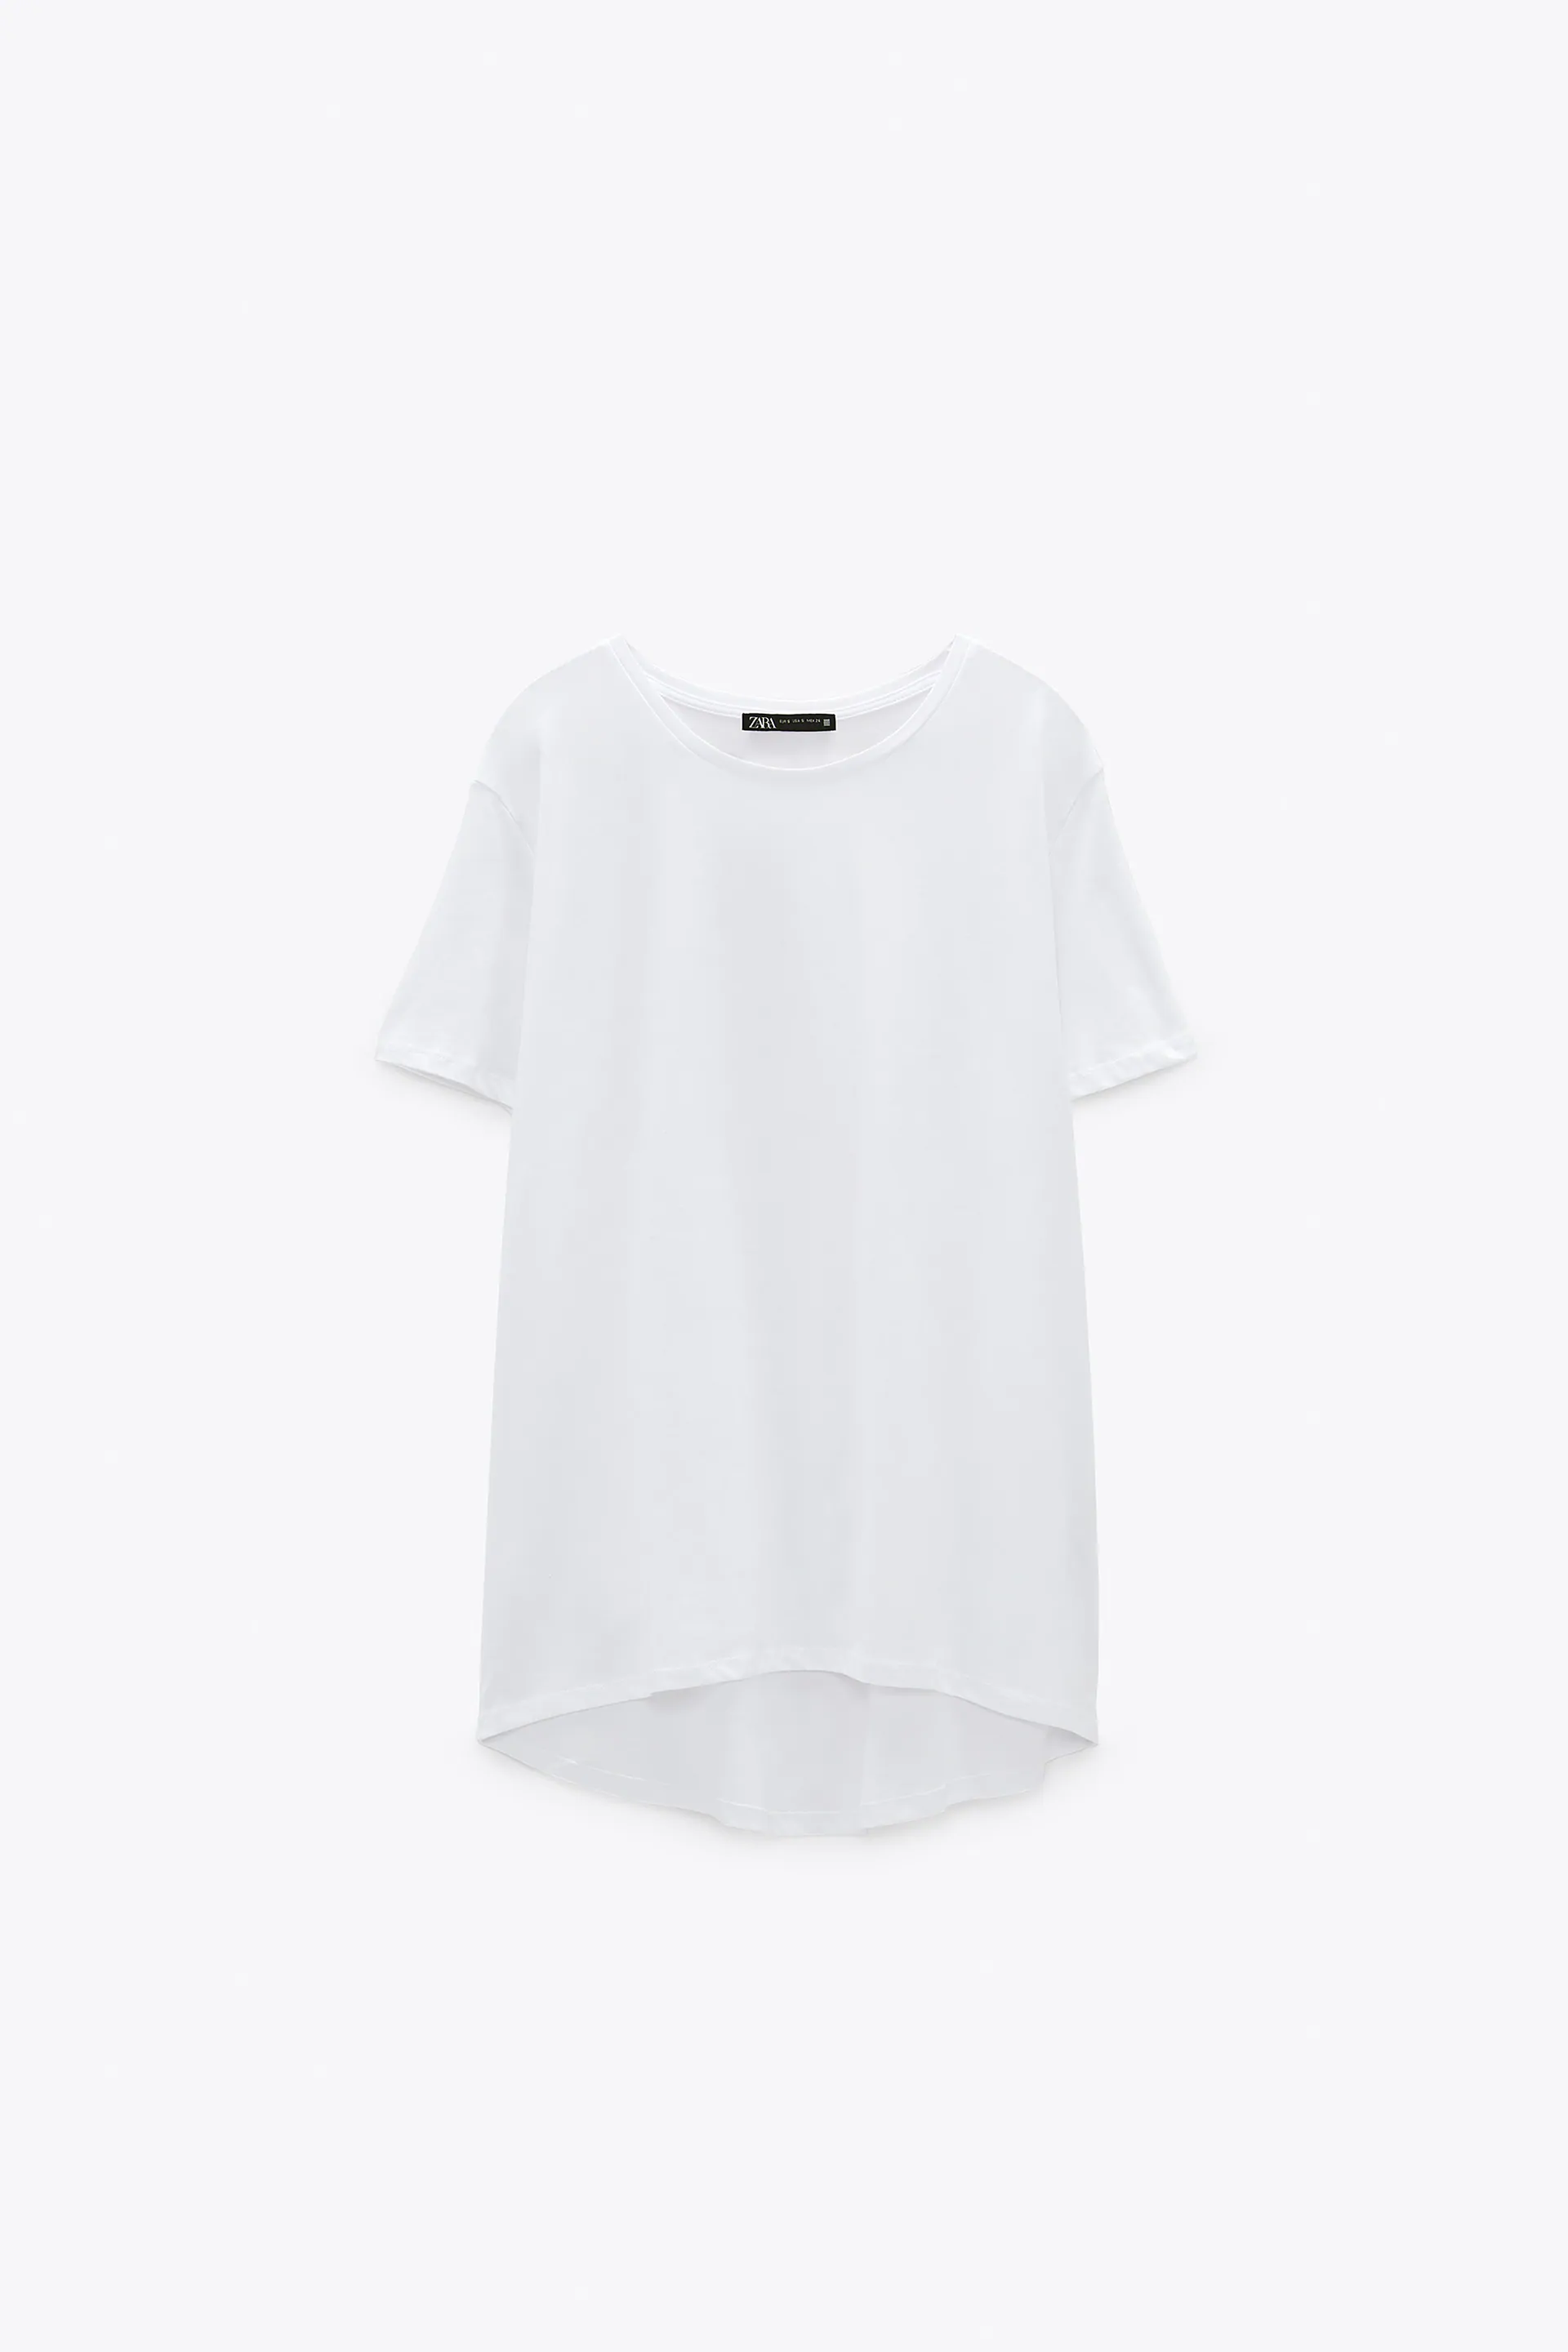 tricou alb zara [2]